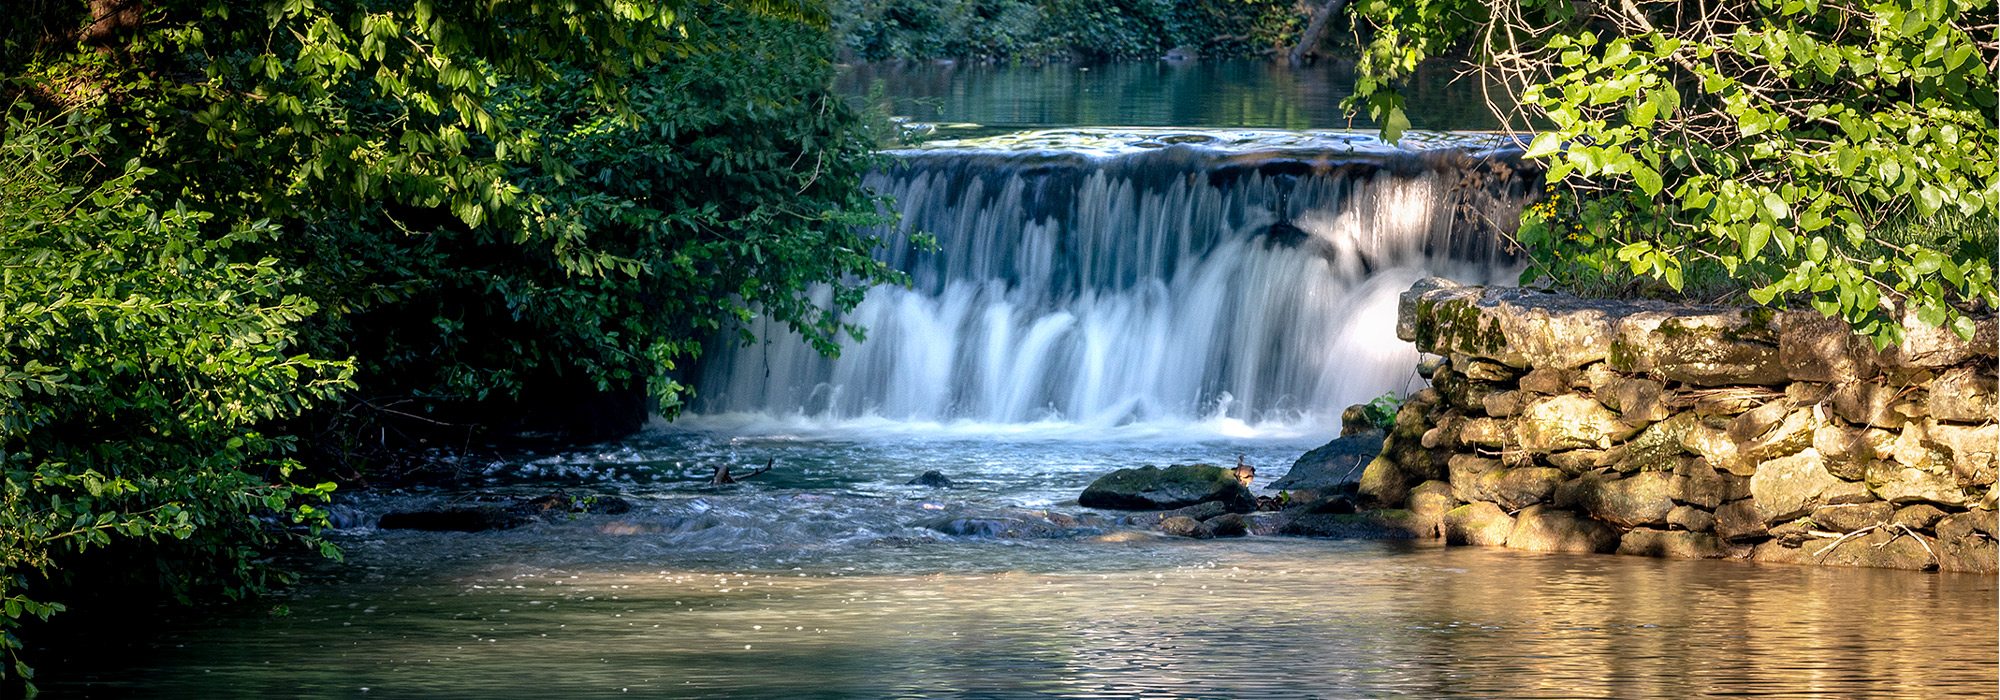 Waterfall in Jones Spring, southwest Missouri